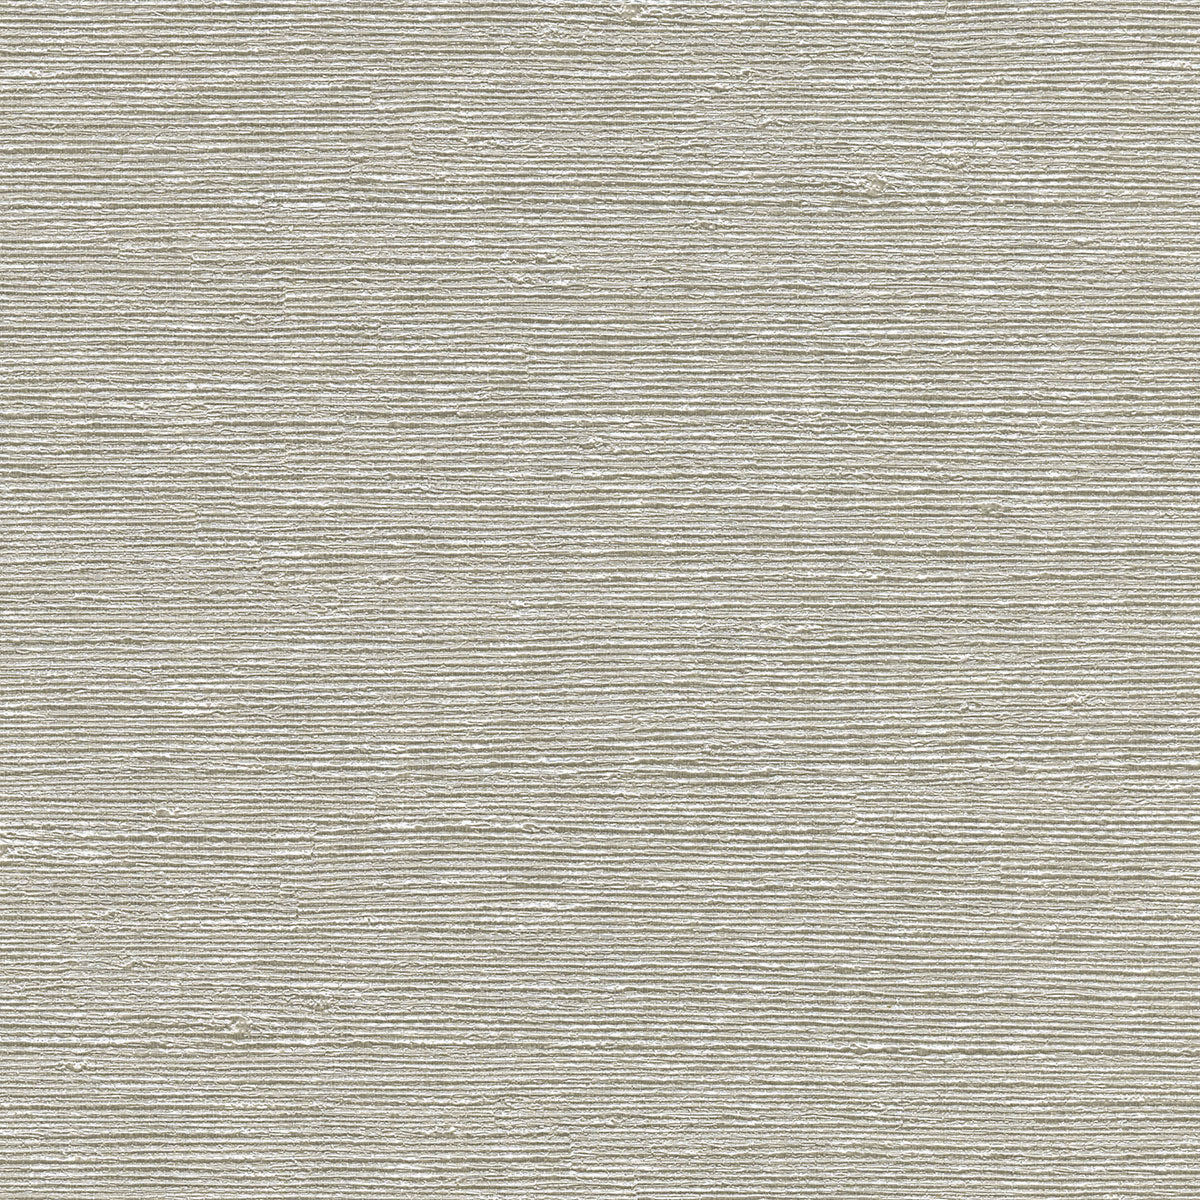 2984-8004 Warner XI Naturals & Grasscloths, Aspero Light Grey Faux Grasscloth Wallpaper Light Grey - Warner